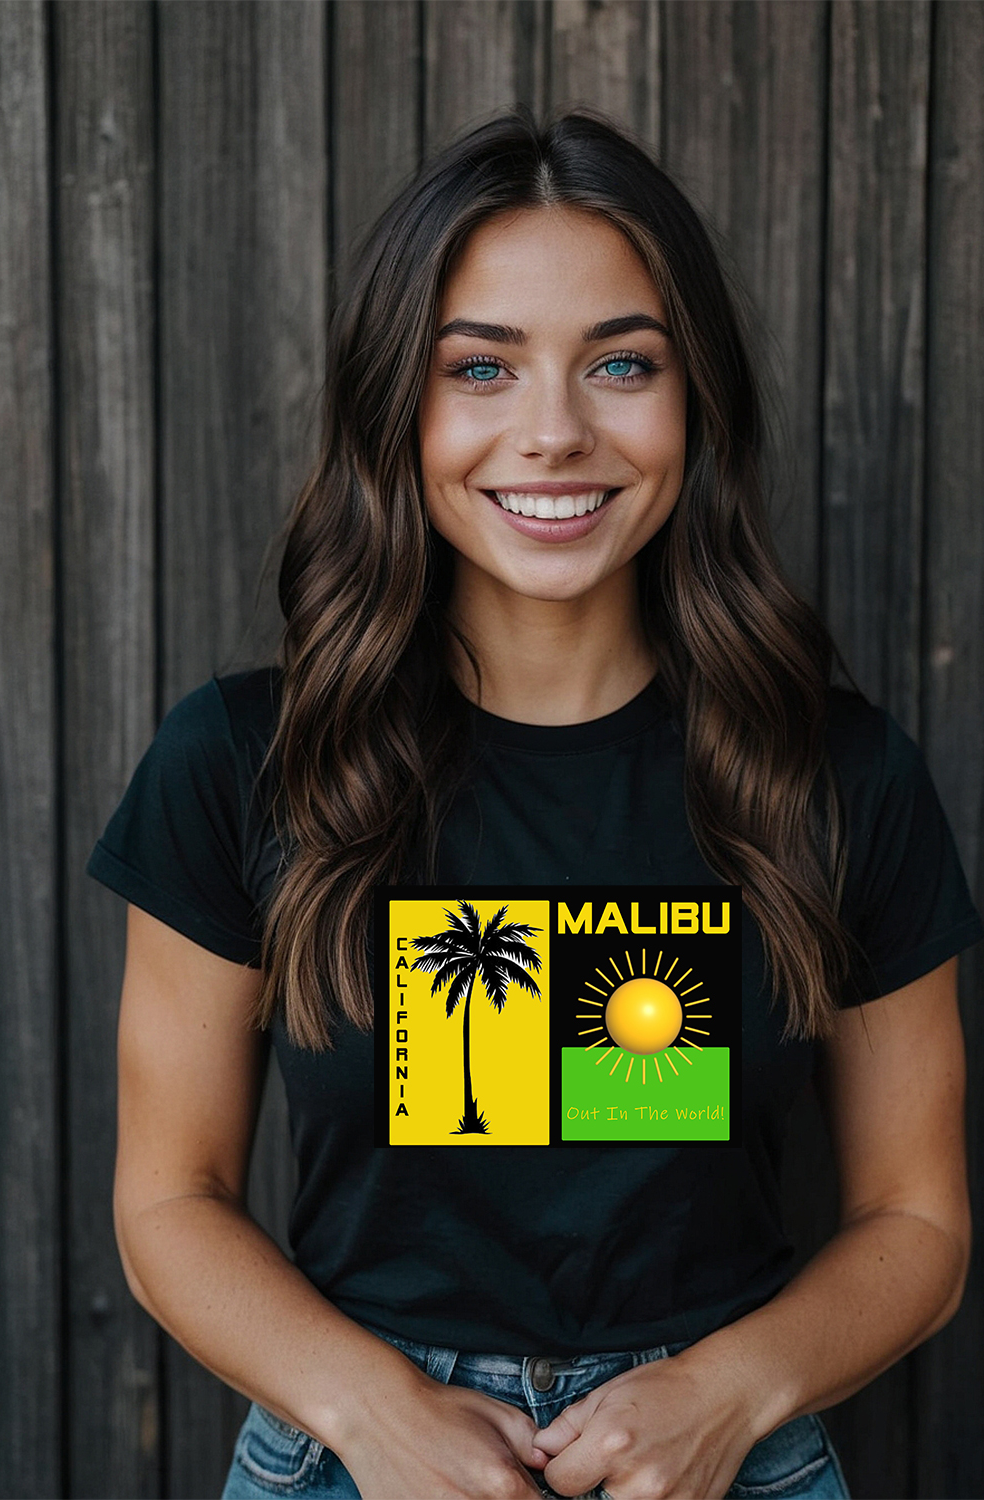 Tesh-with-Malibu-T-Shirt-copy